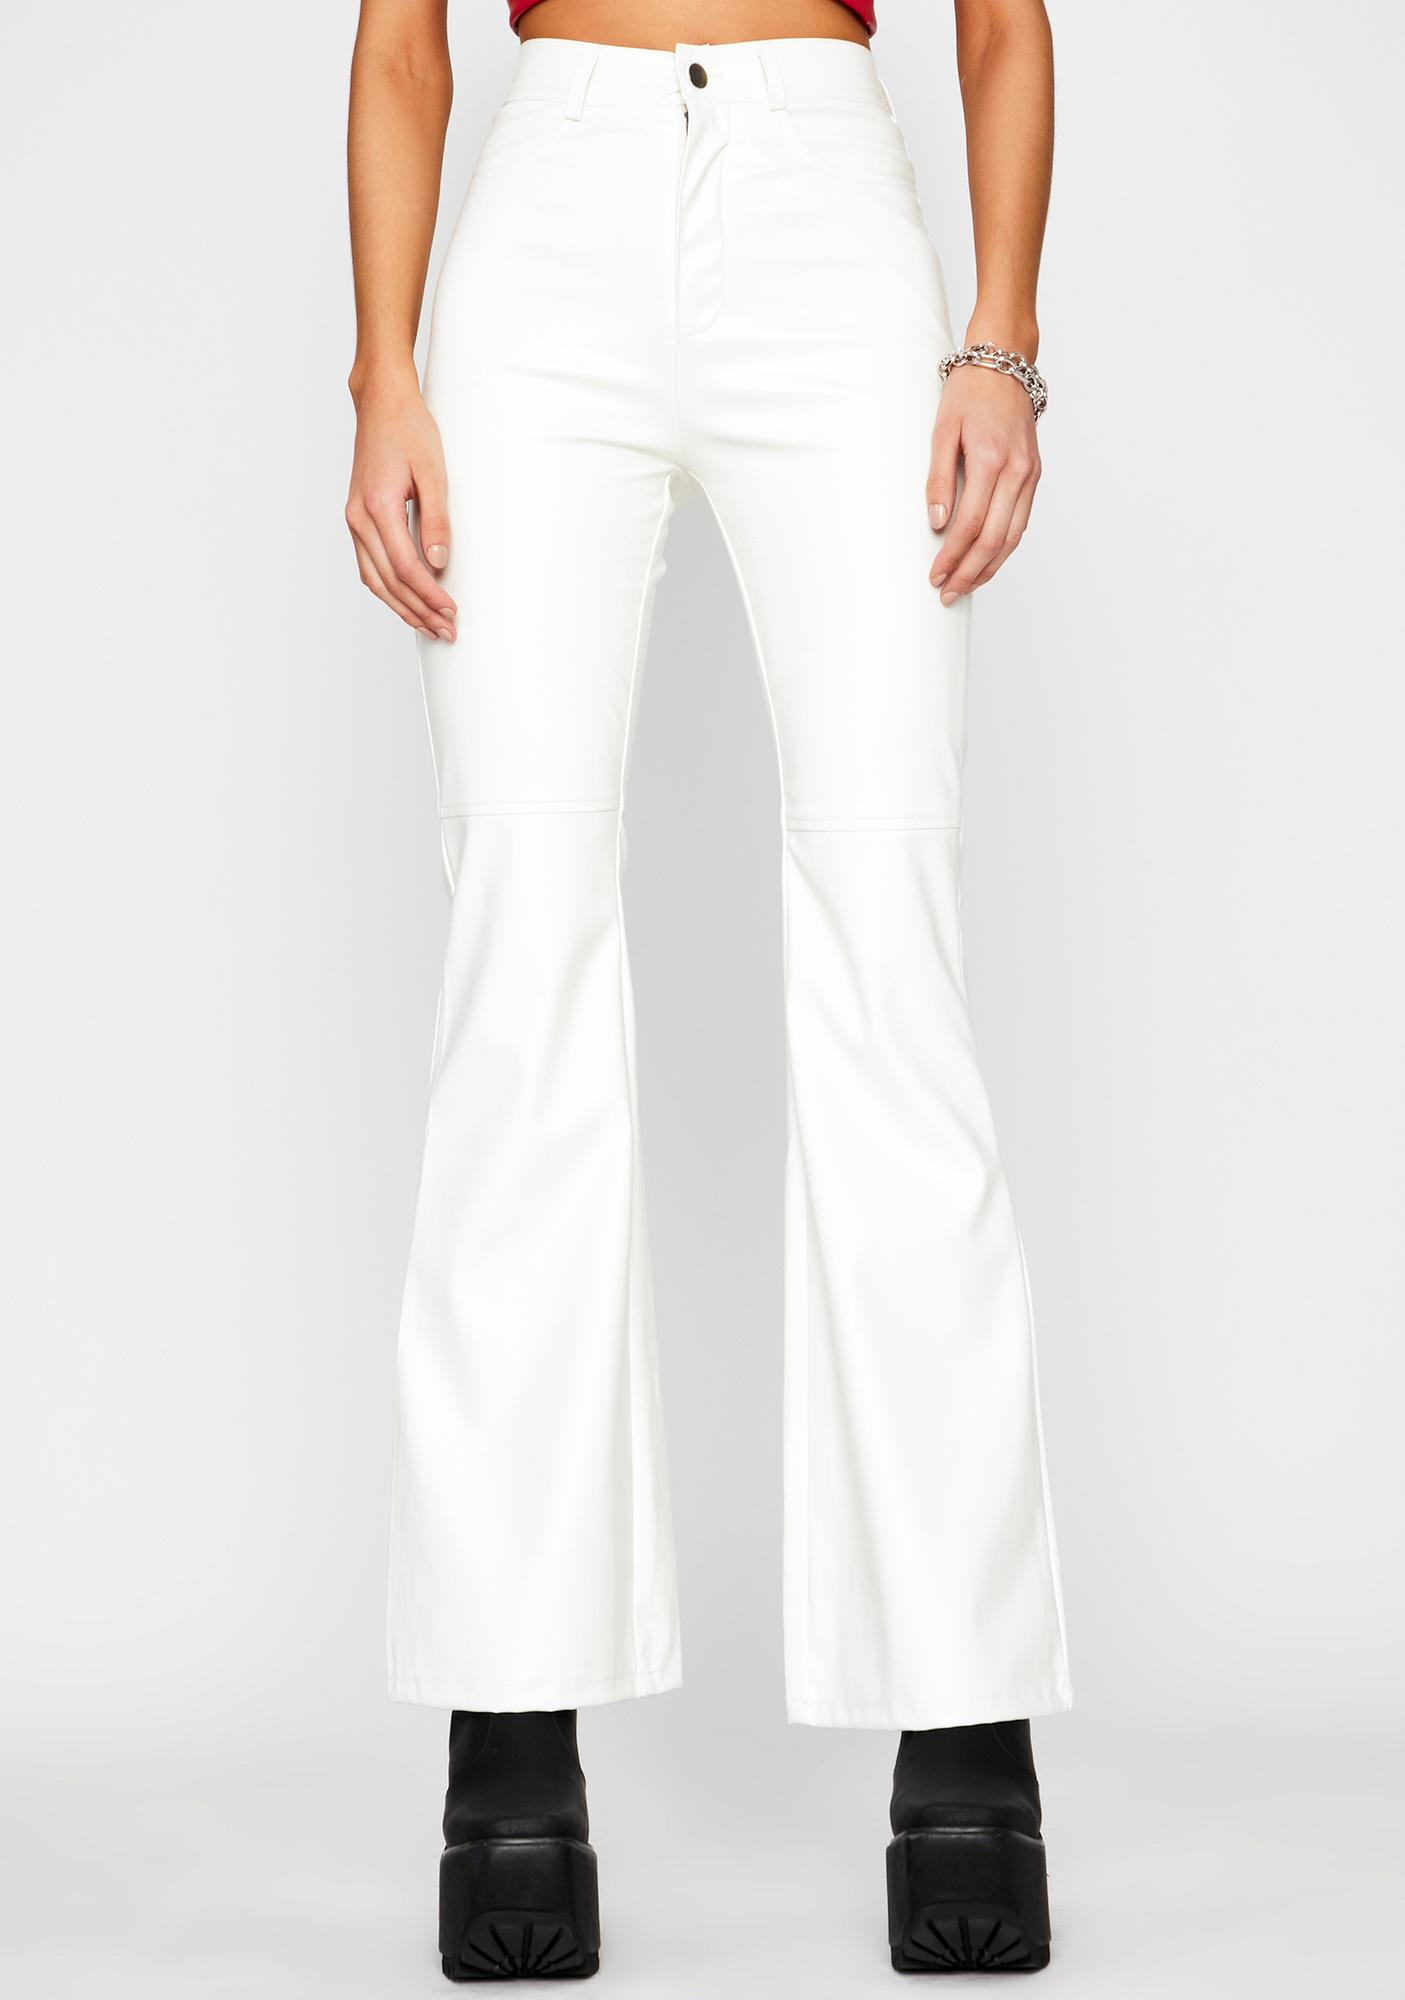 faux leather white pants